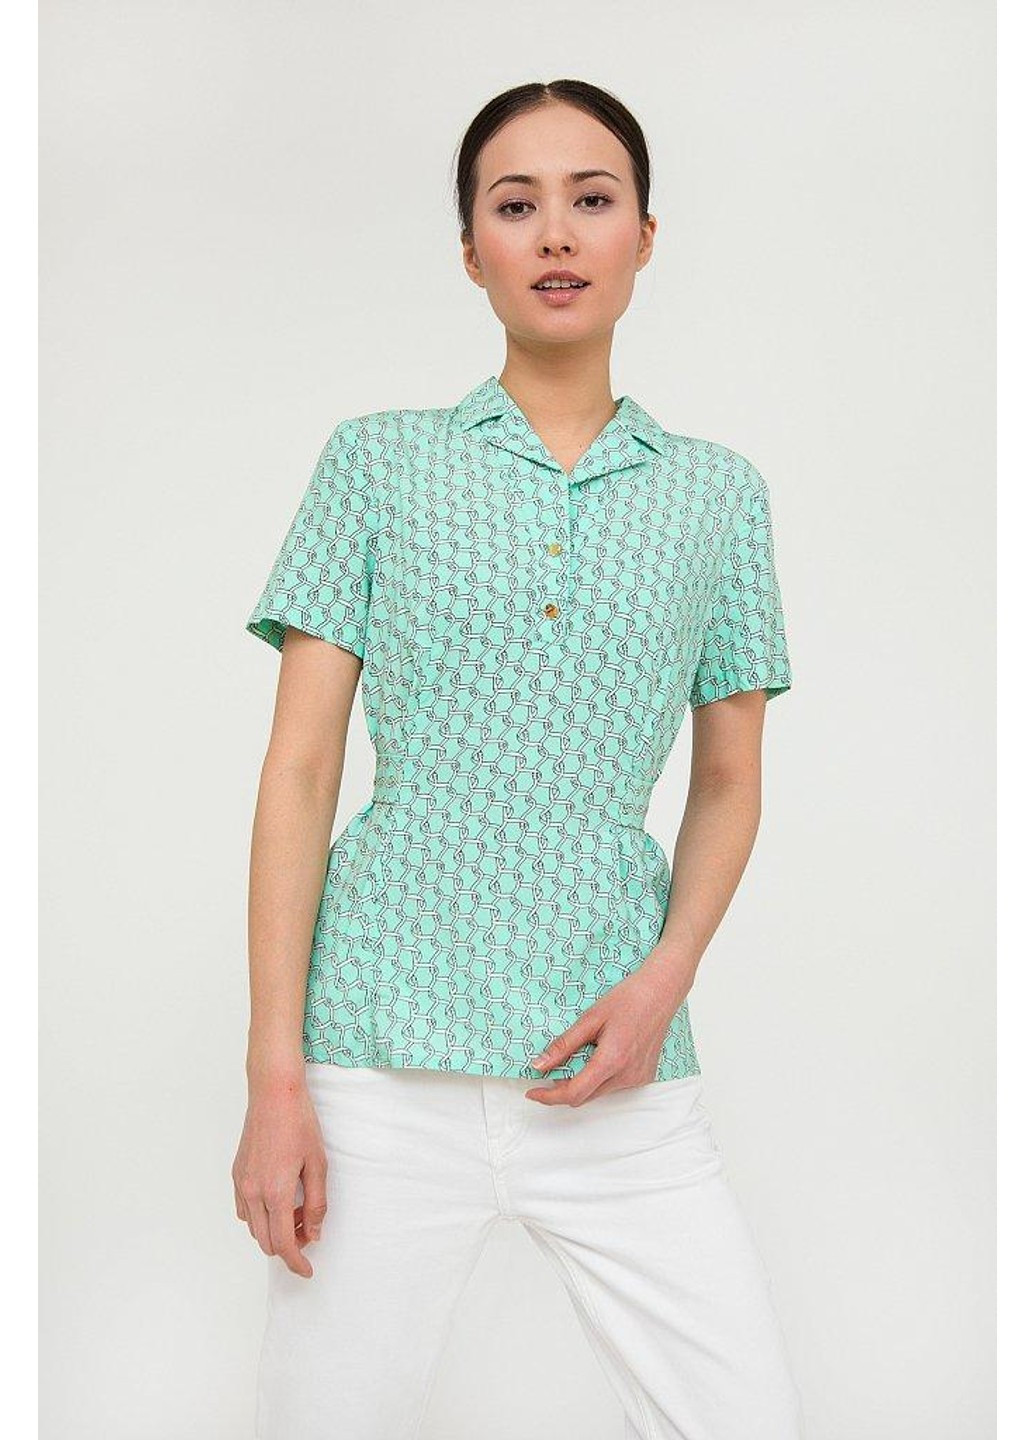 Бирюзовая летняя блуза s20-11063-915 Finn Flare